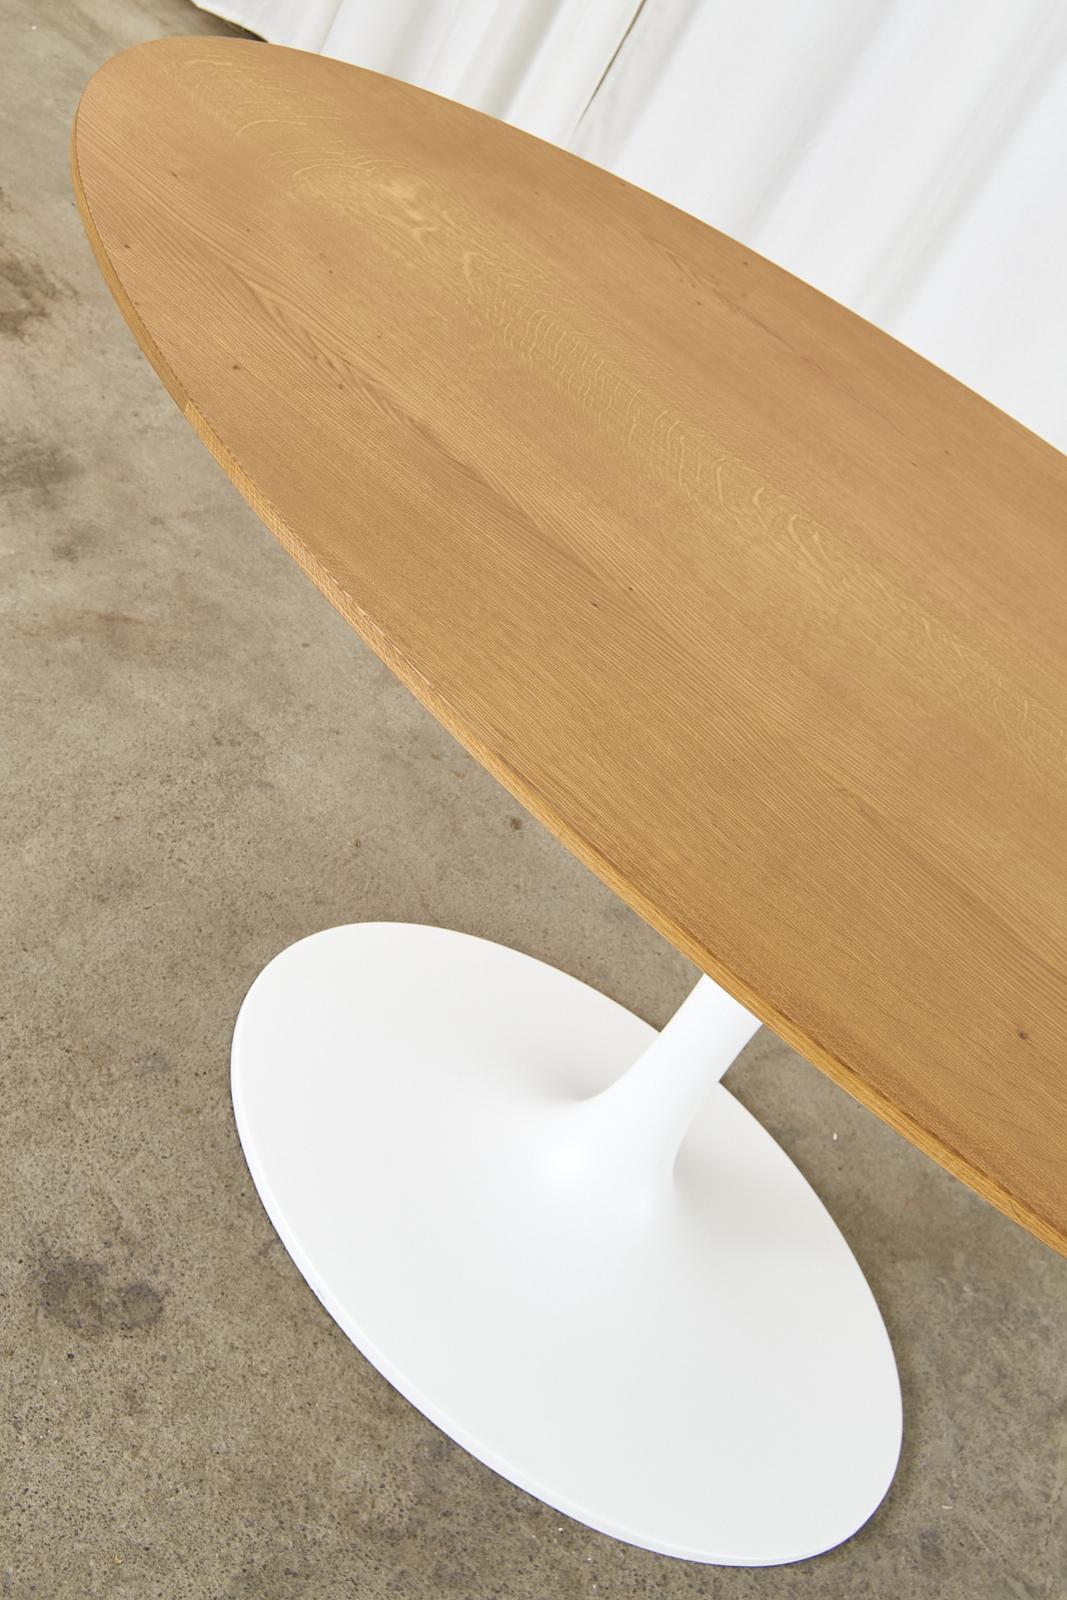 American Eero Saarinen Knoll Style Oval Oak Top Tulip Dining Table